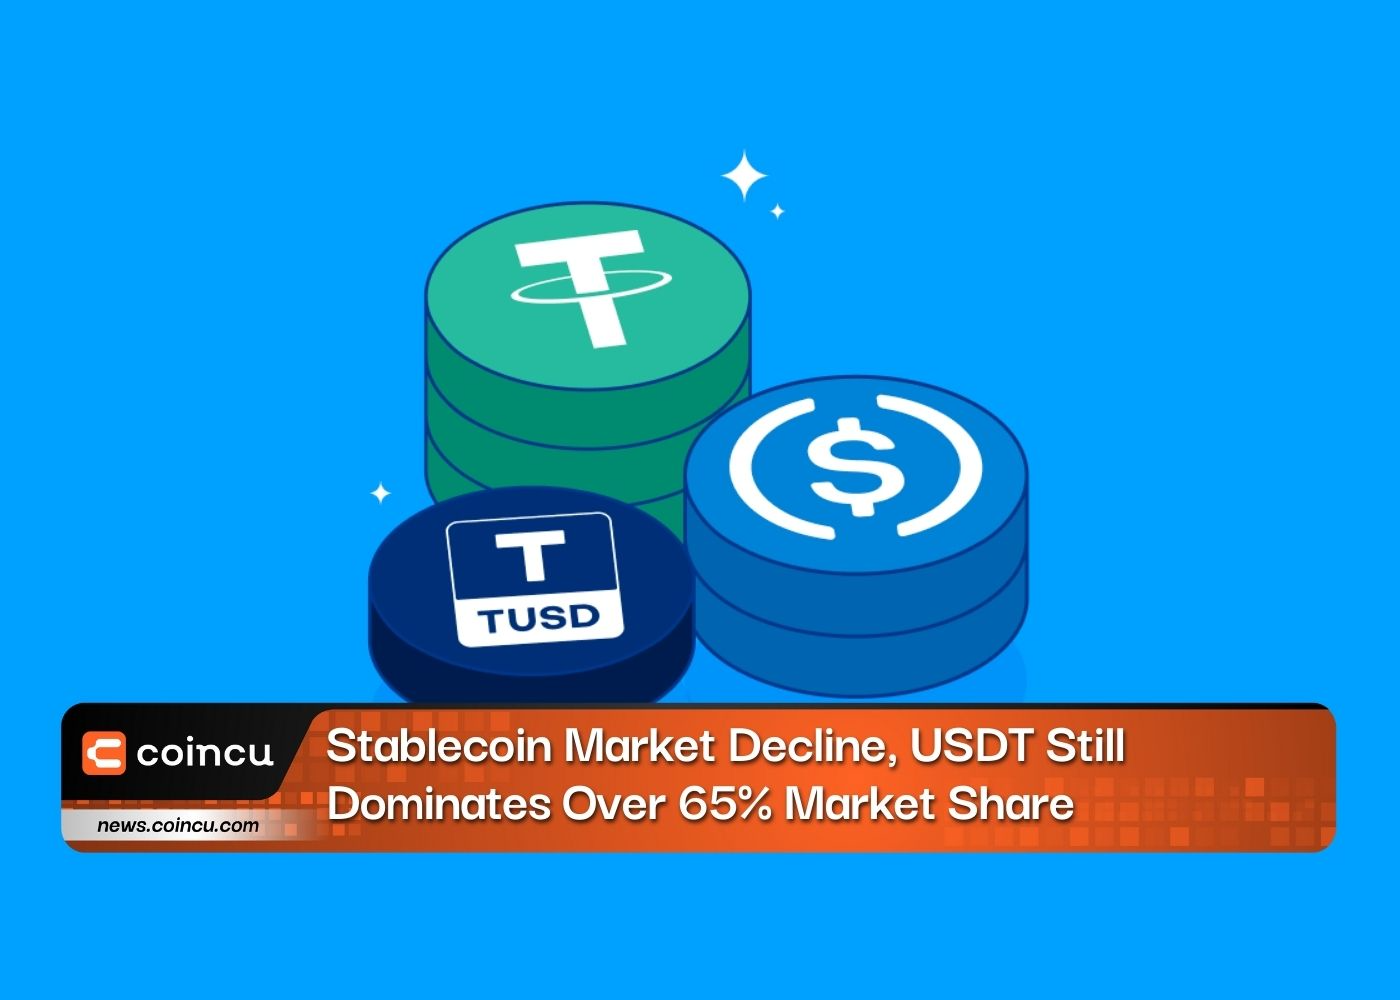 Stablecoin Market Decline, USDT Still Dominates Over 65% Market Share